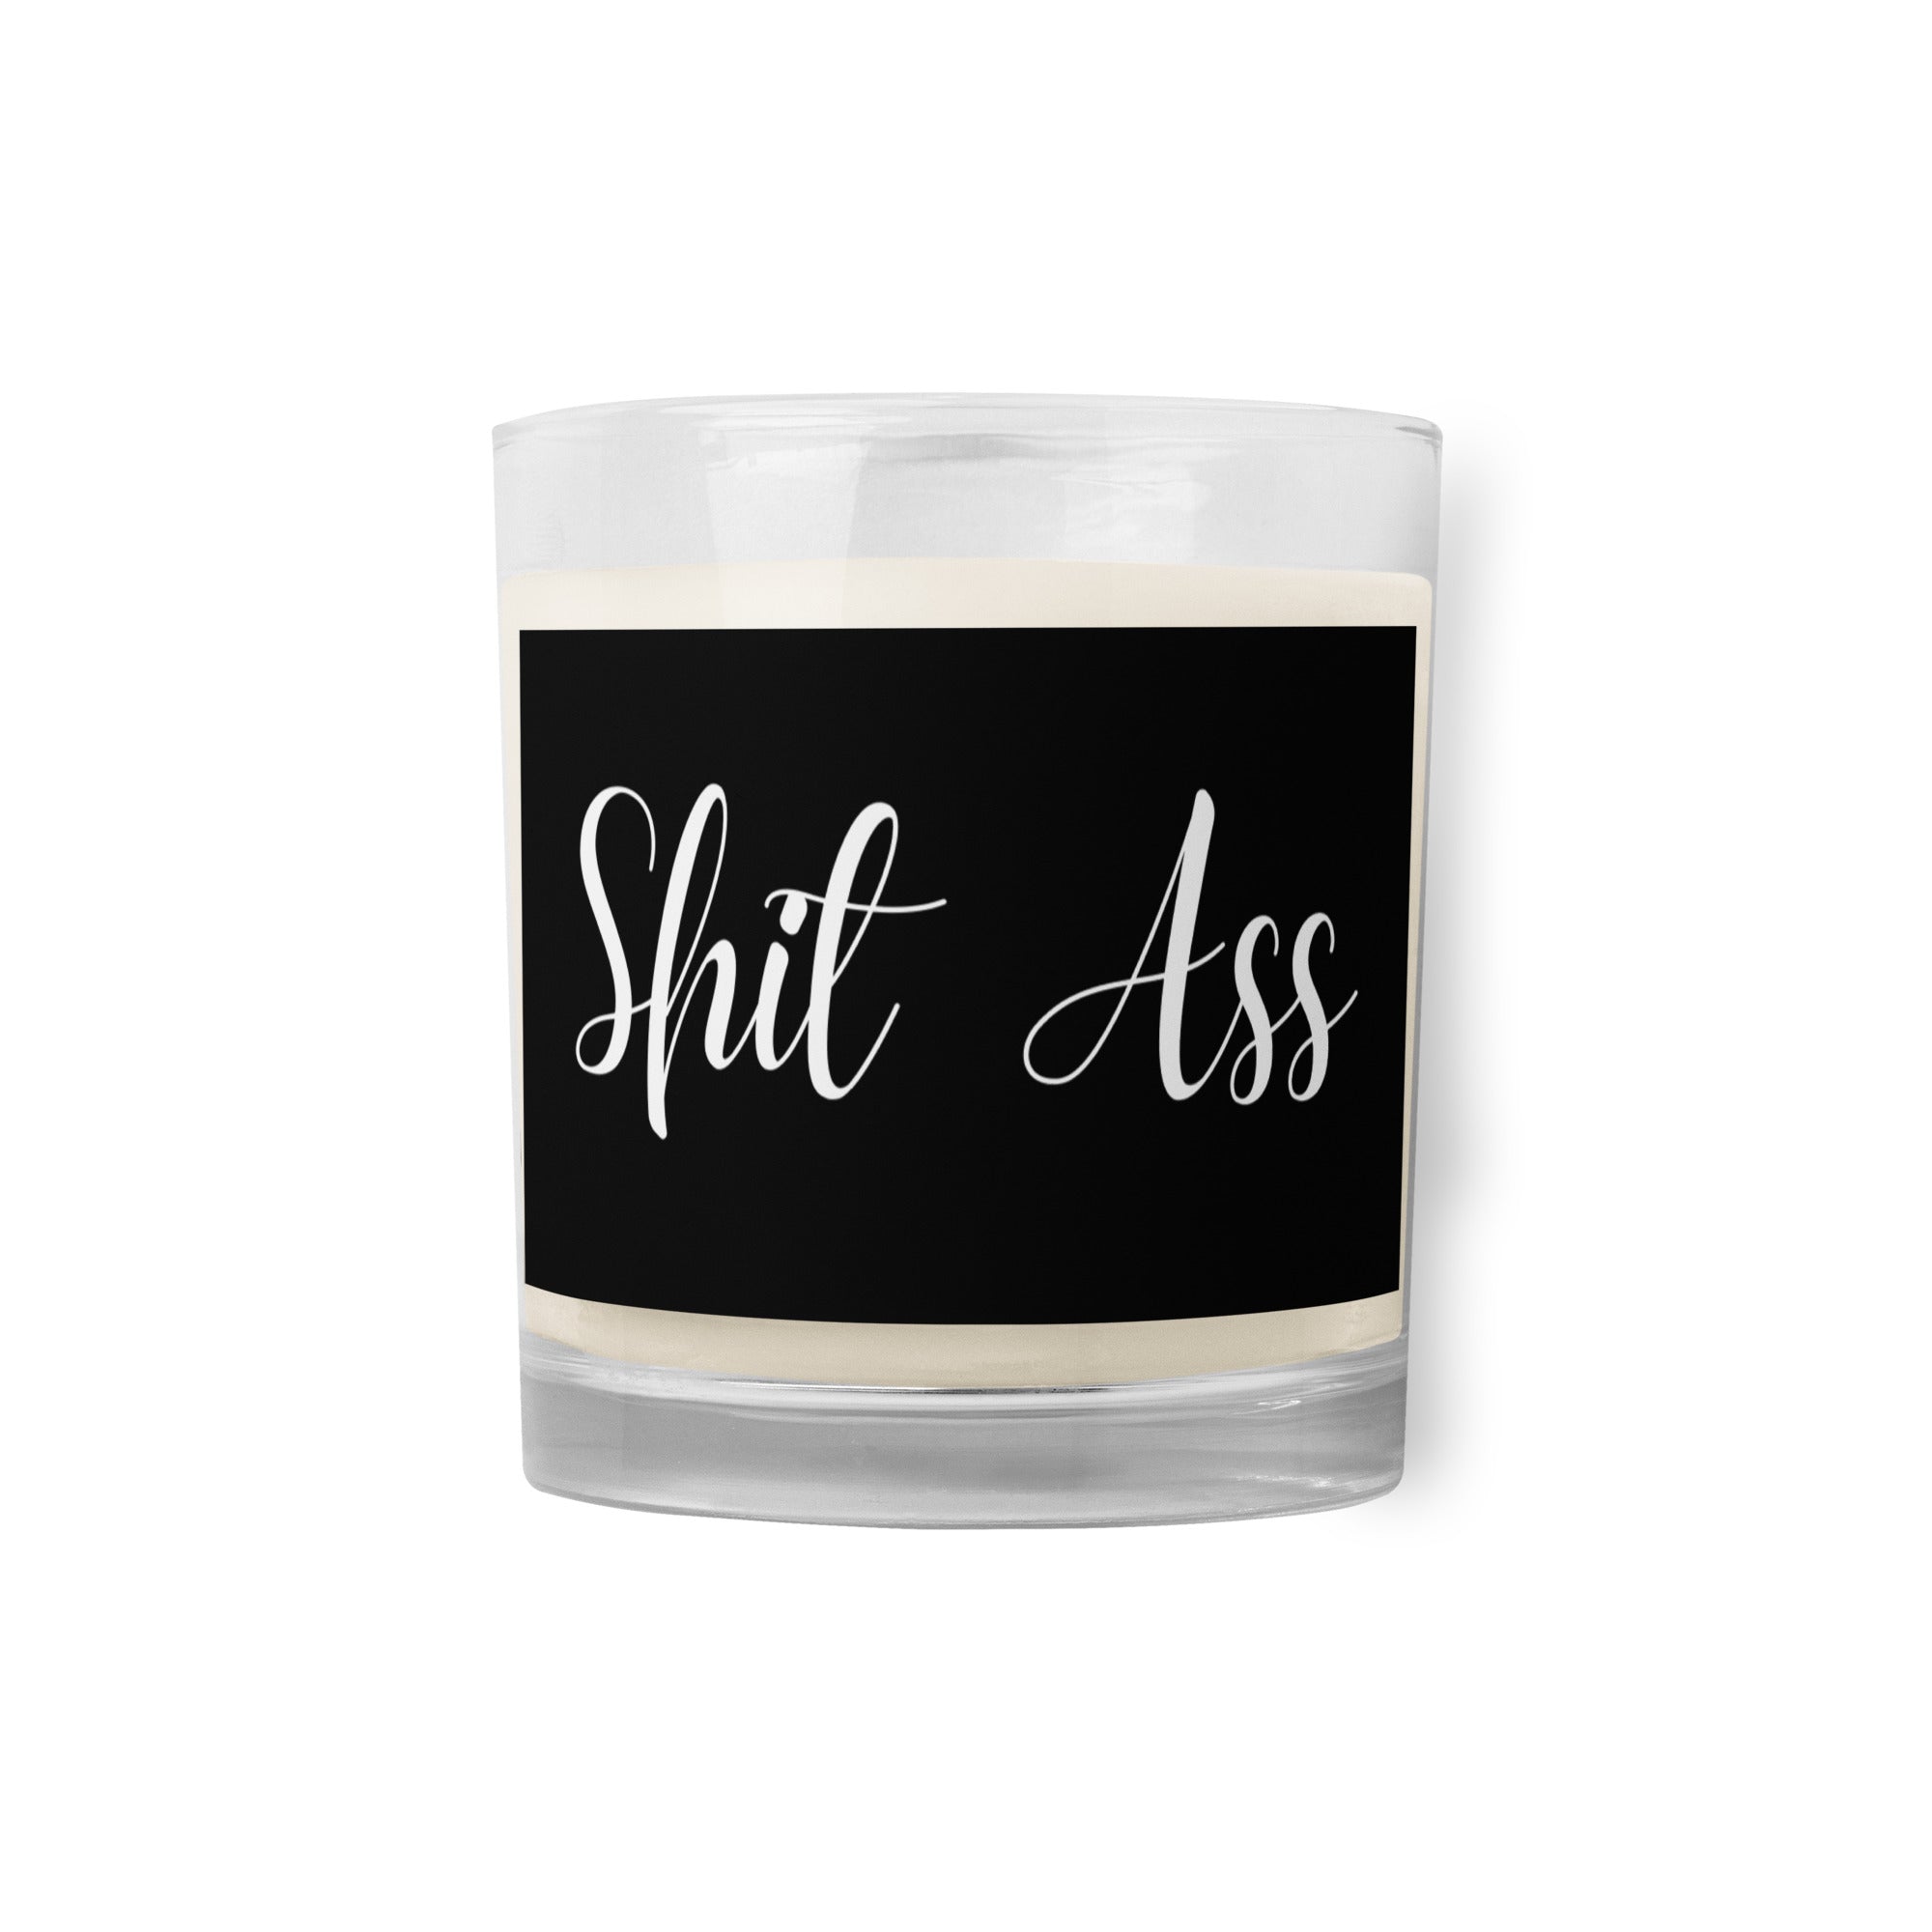 SH&T A$$ Rez Humor Glass jar soy wax candle